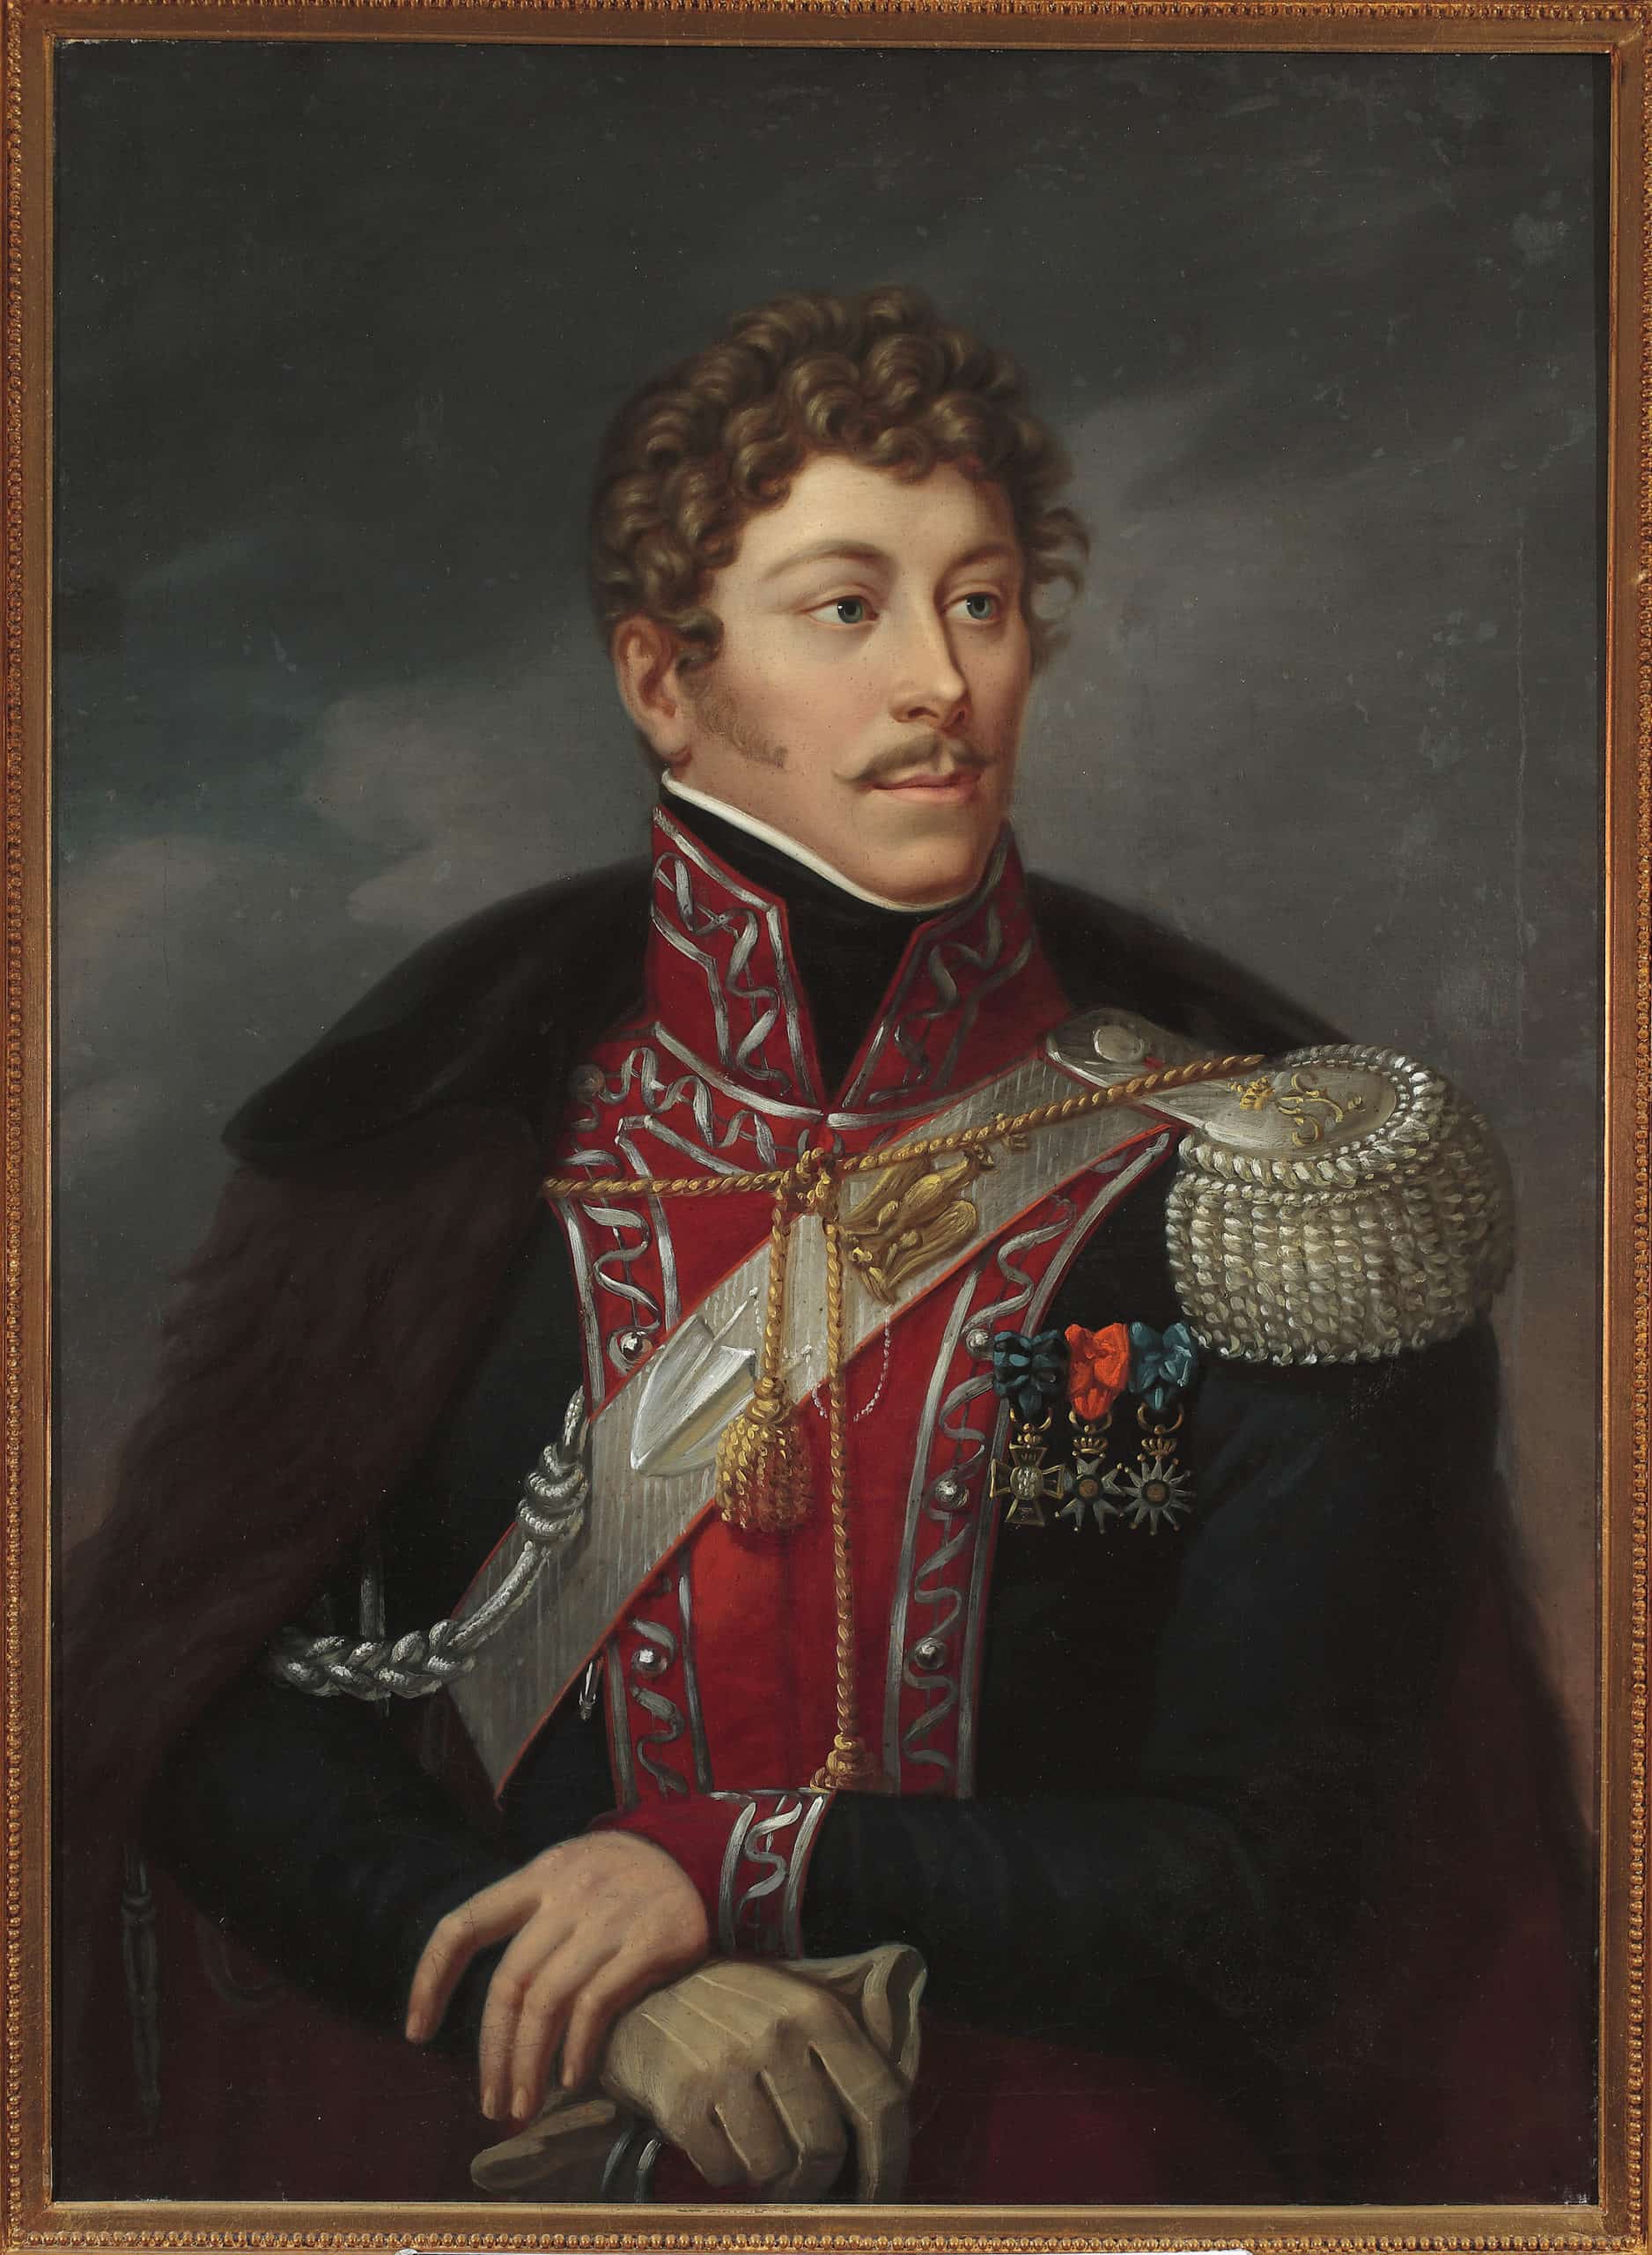 Portrait of Jan Leon Hipolit Kozietulski. Painting probably authored by Antoni Brodowski (c. 1810-20). Source: National Museum Warsaw